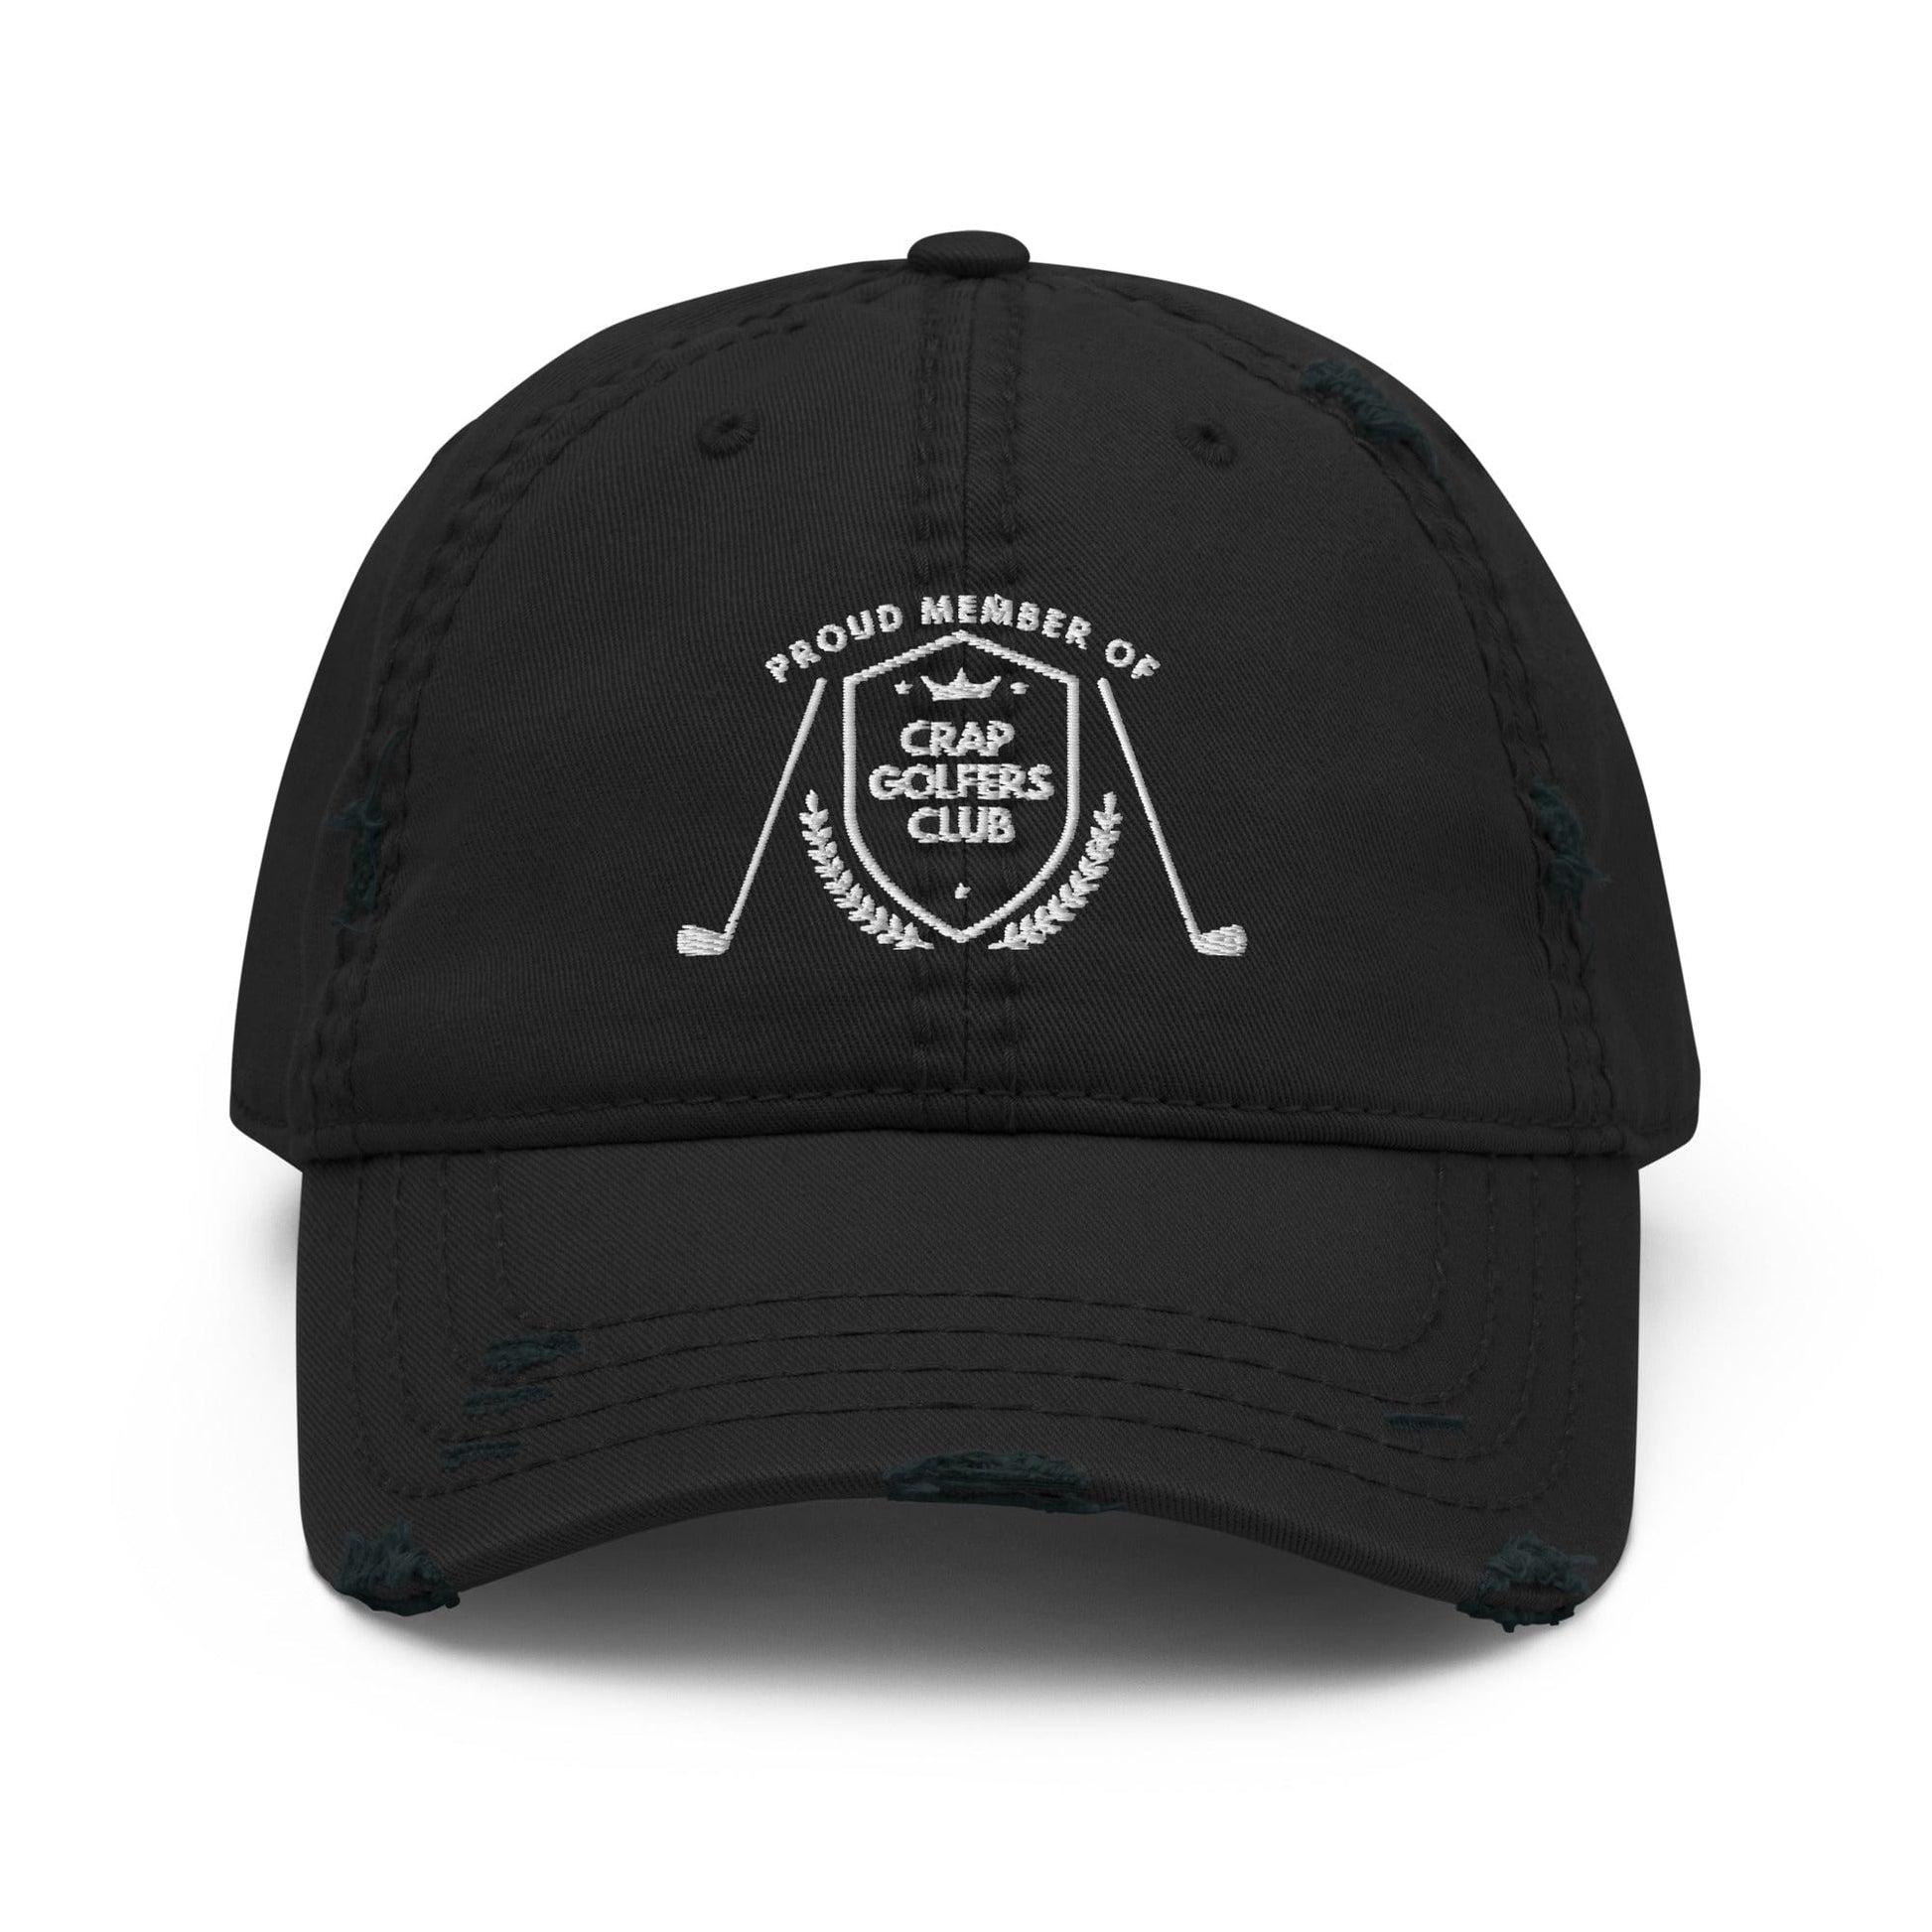 Funny Golfer Gifts  Distressed Cap Black Crap Golfers Club Distressed Hat